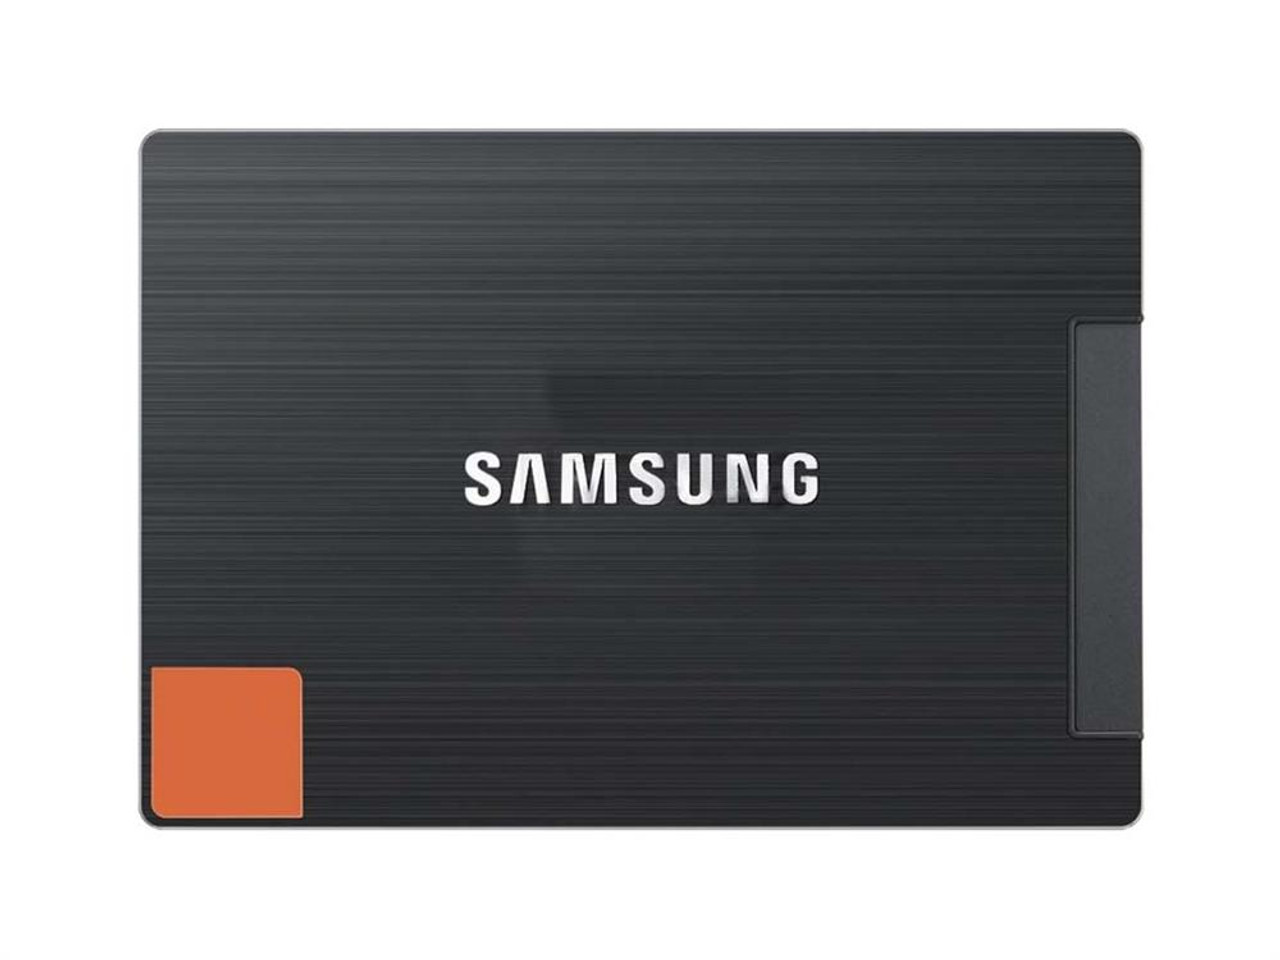 MX-7PC064 Samsung 830 Series 64GB MLC SATA 6Gbps 2.5-inch Internal Solid State Drive (SSD)